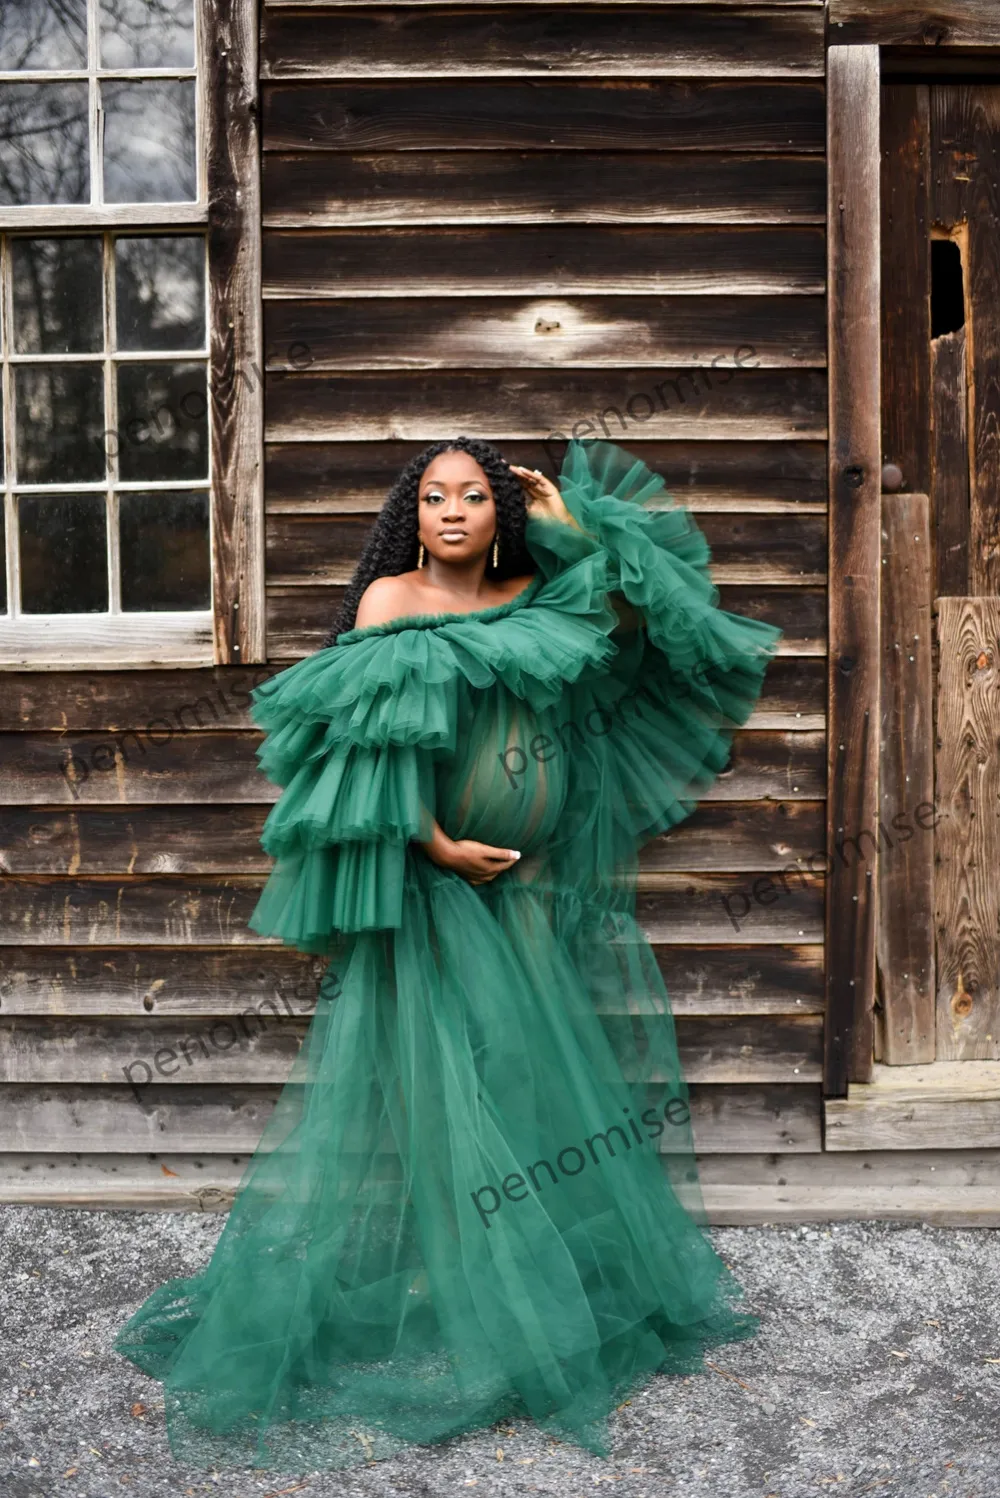 Green Maternity Dresses